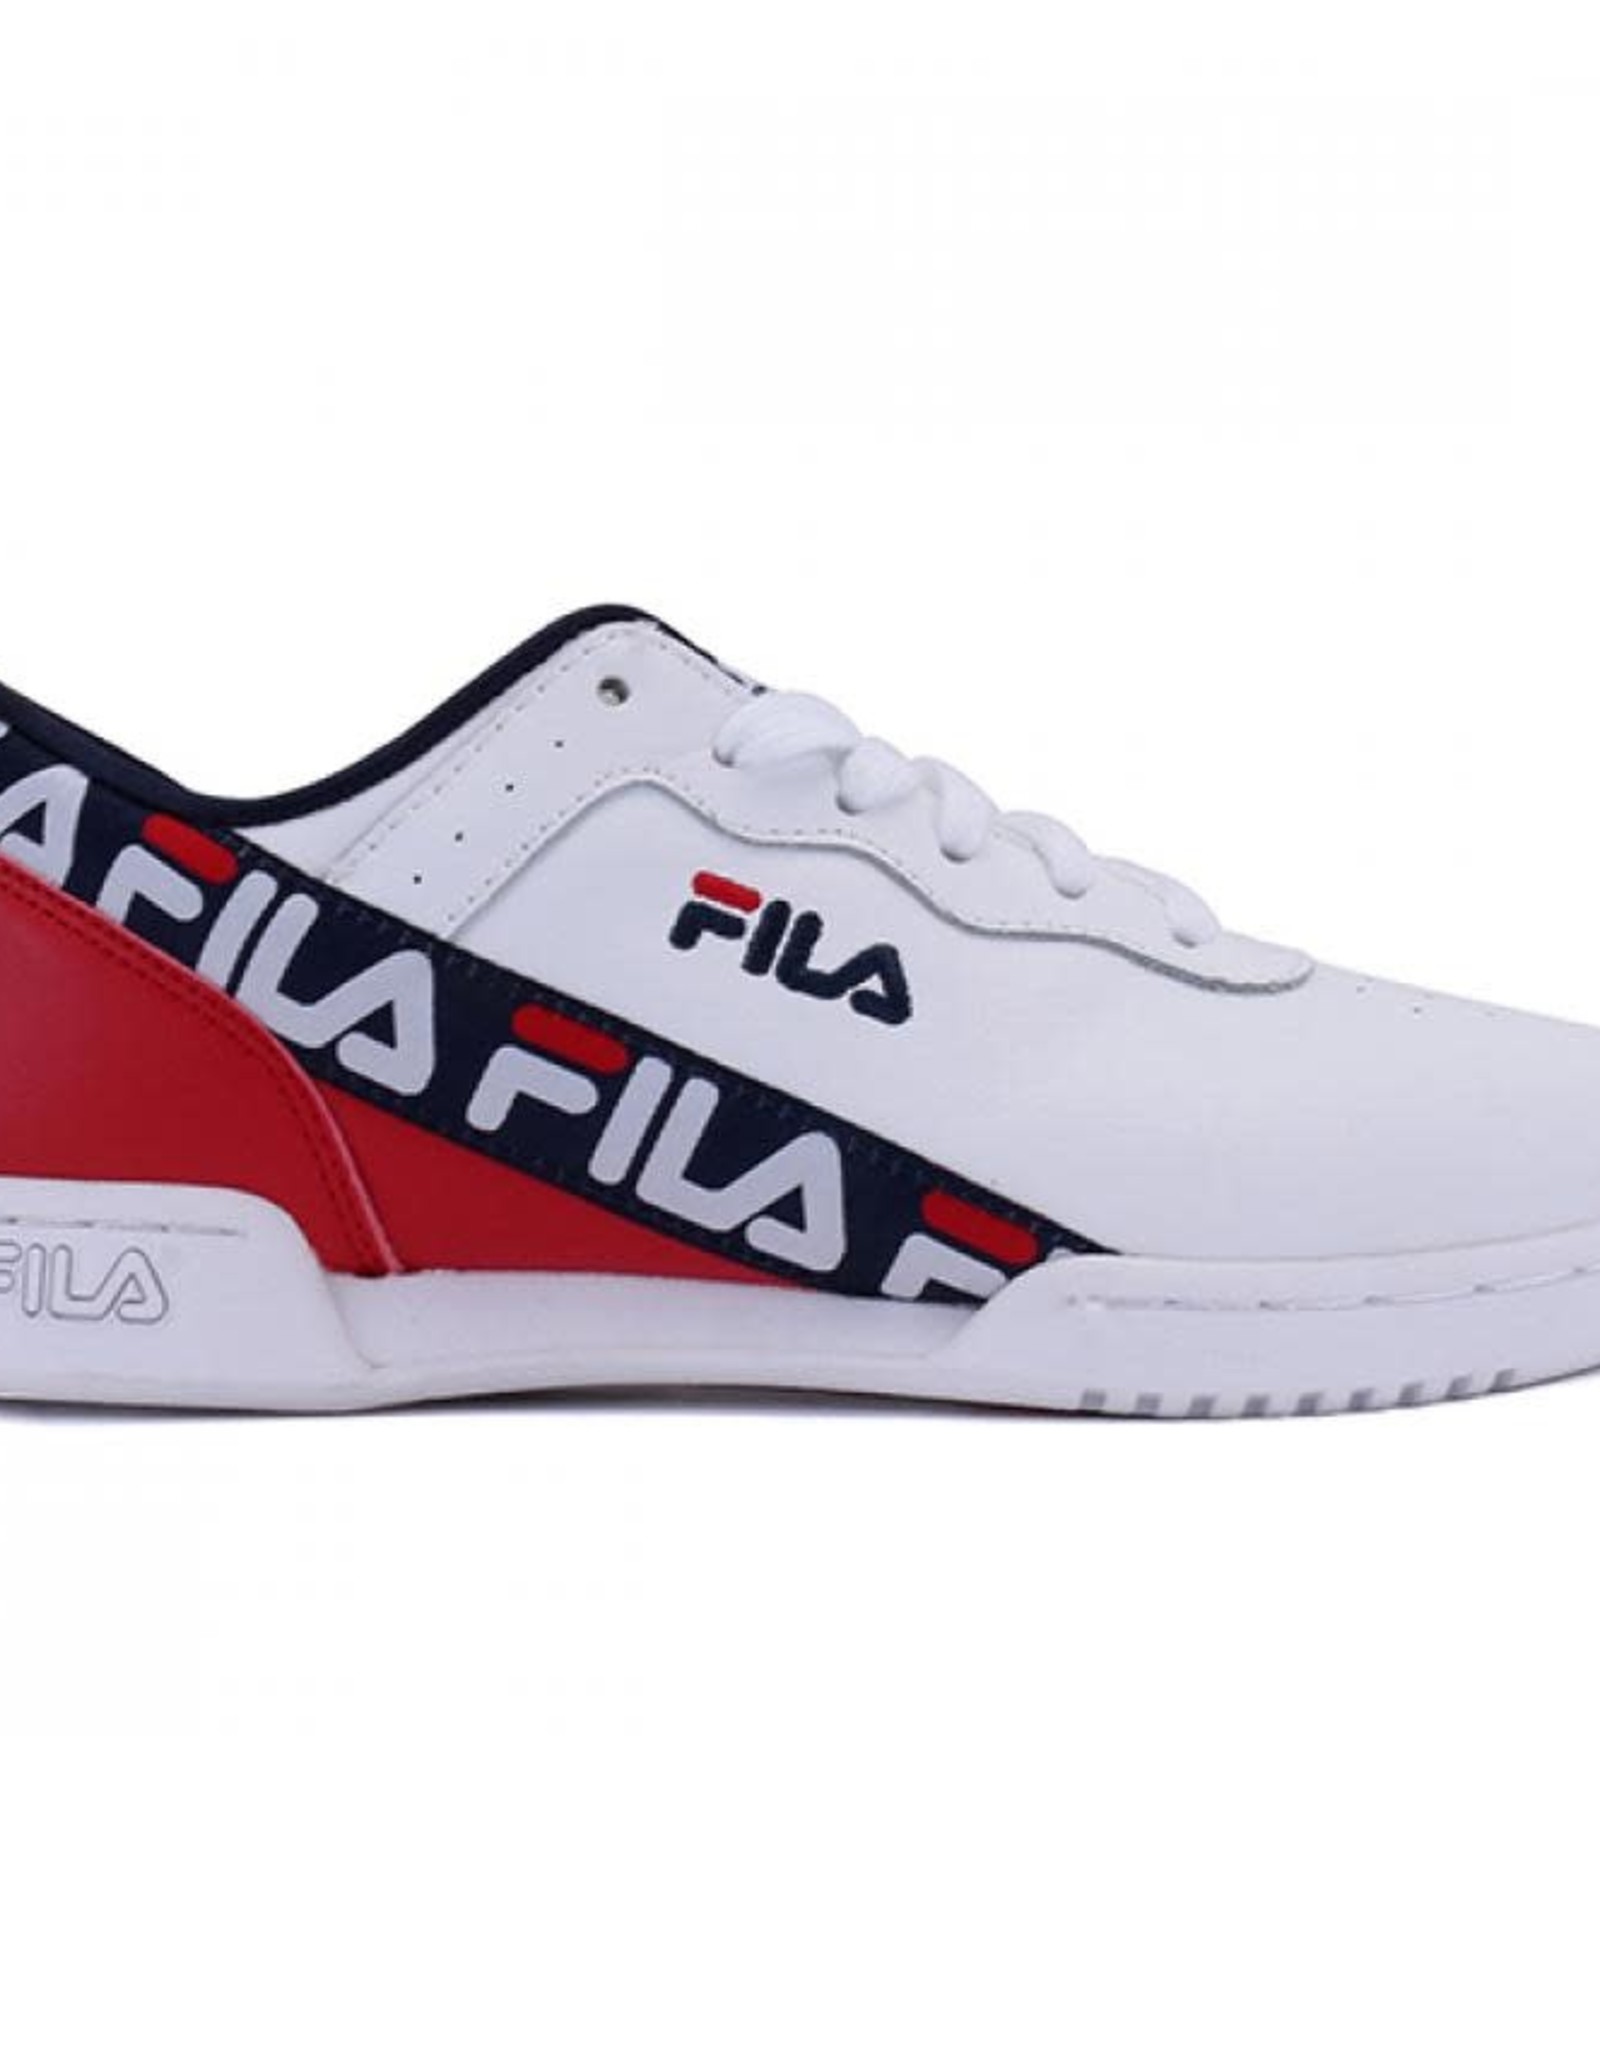 fila women's original fitness shoes white